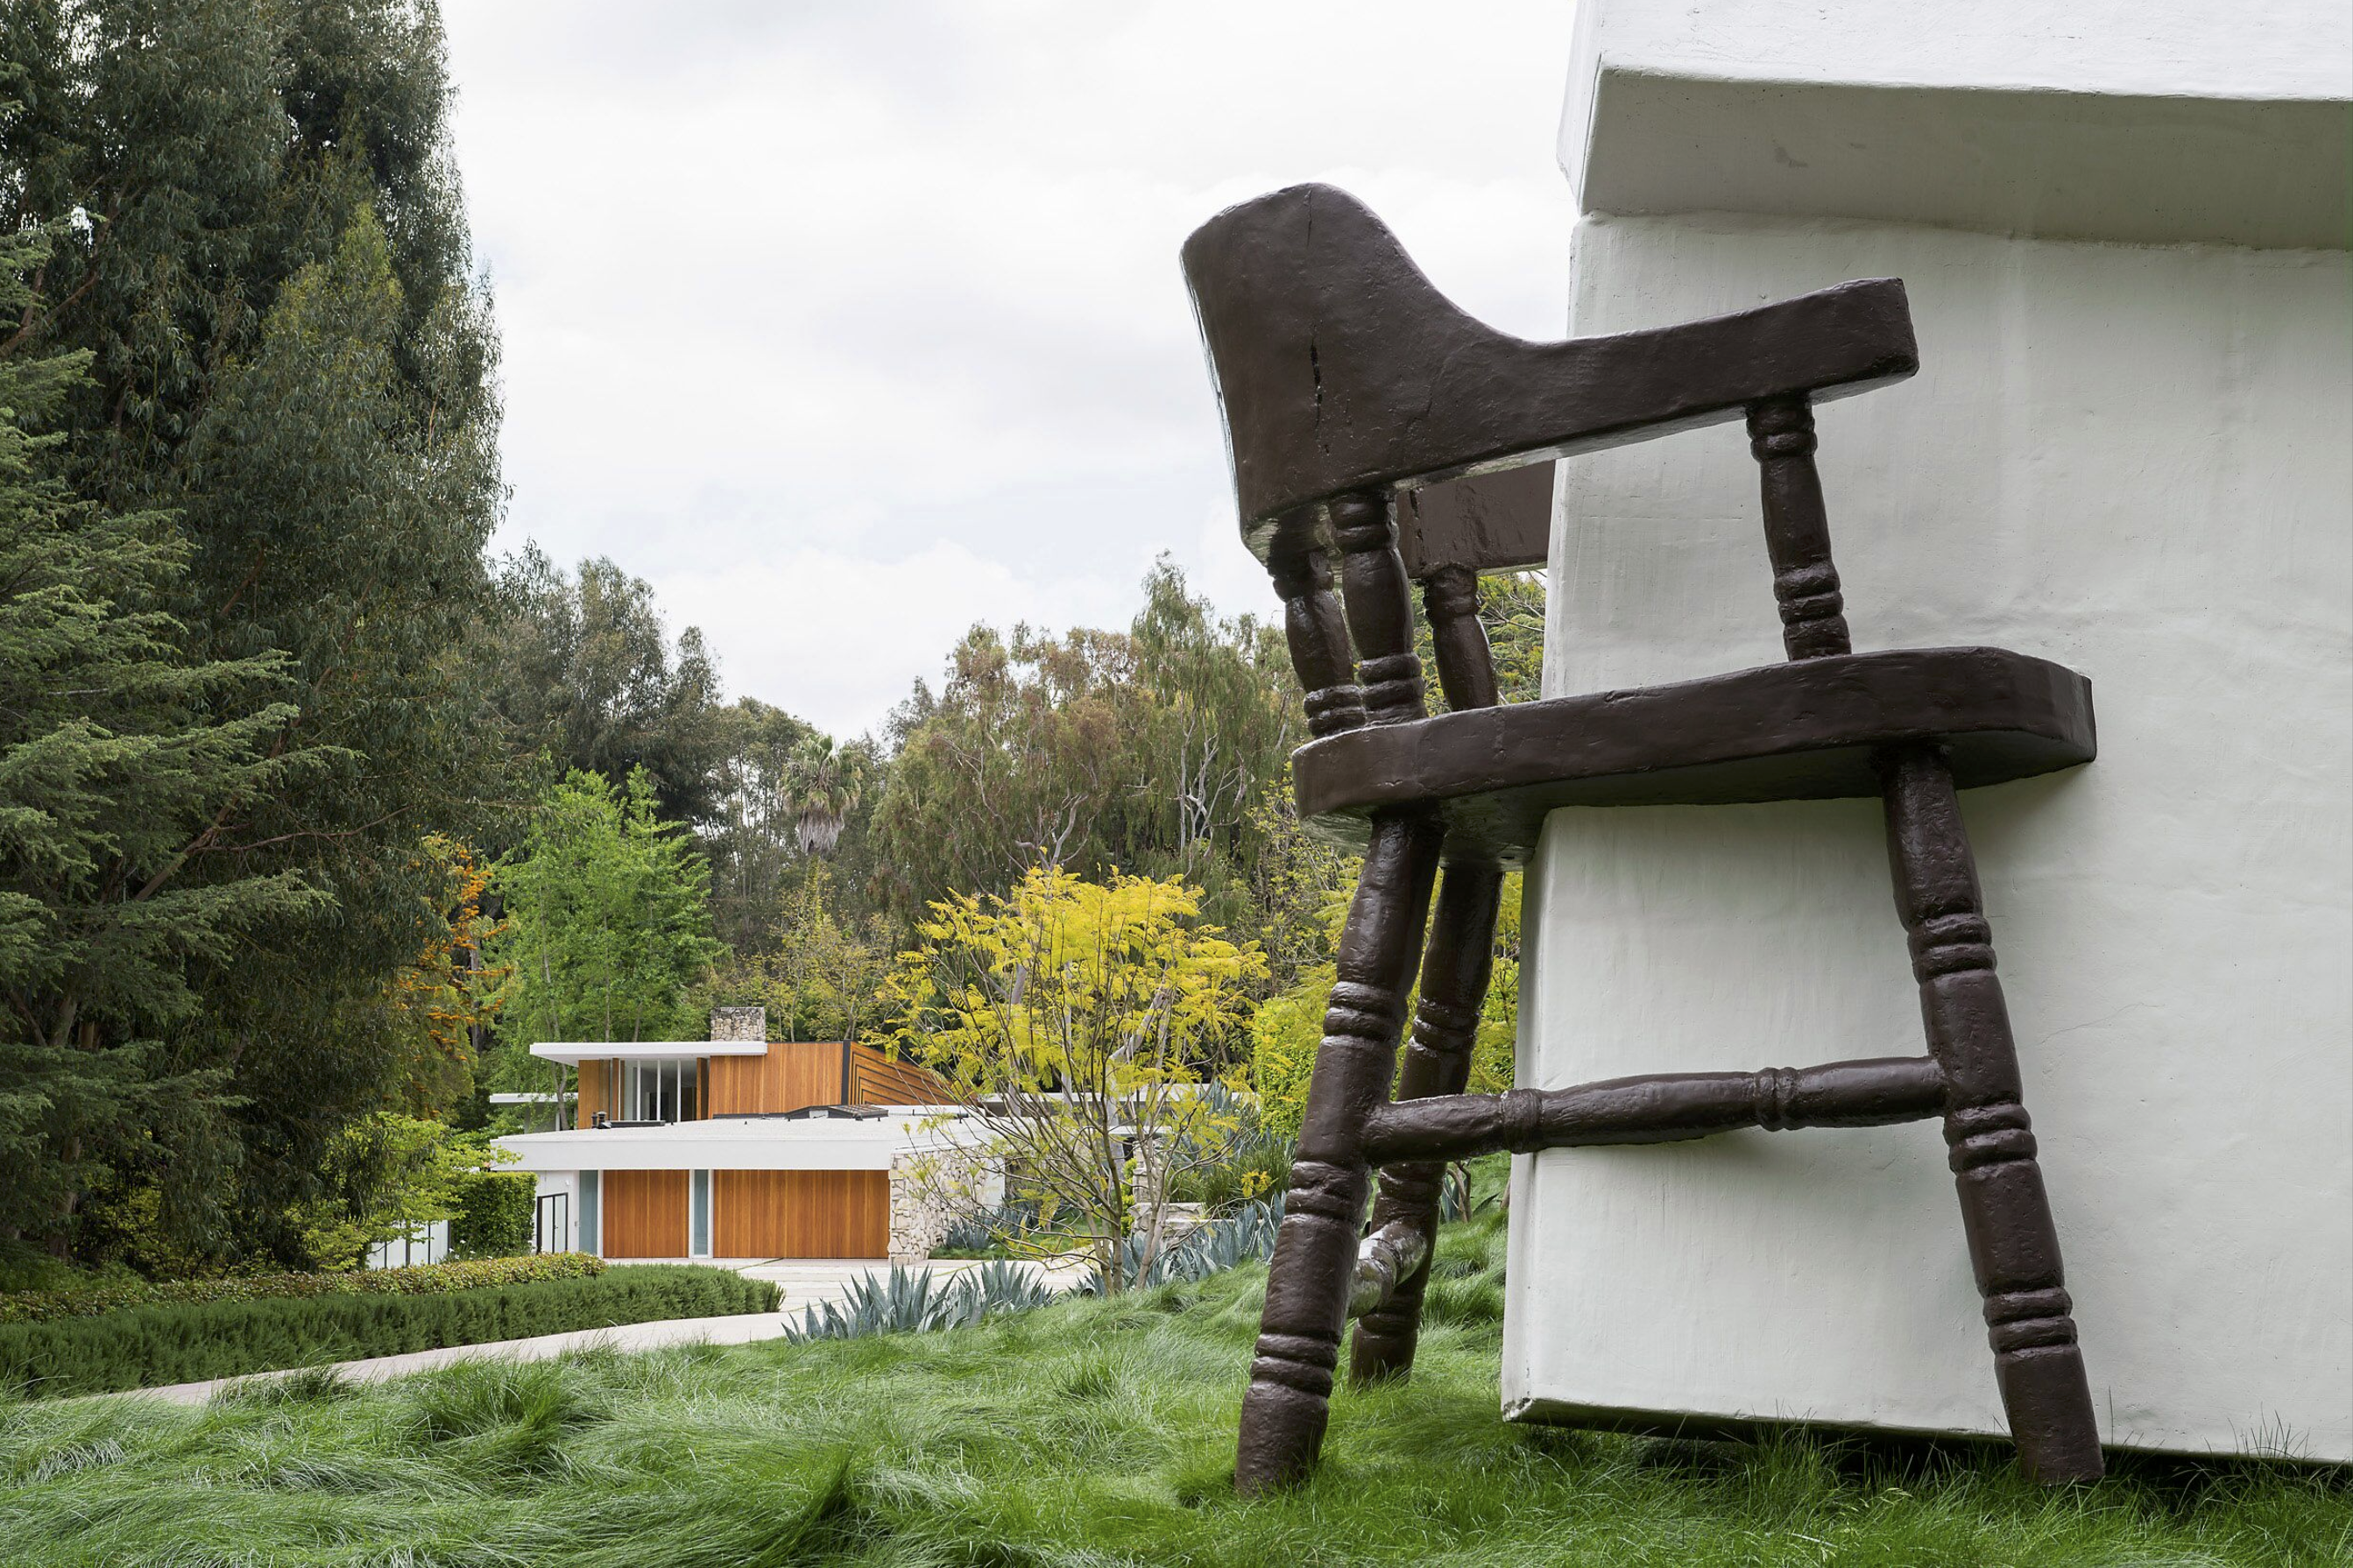 Gary Cooper House, Los Angeles, California, Quincy Jones architect, 2012